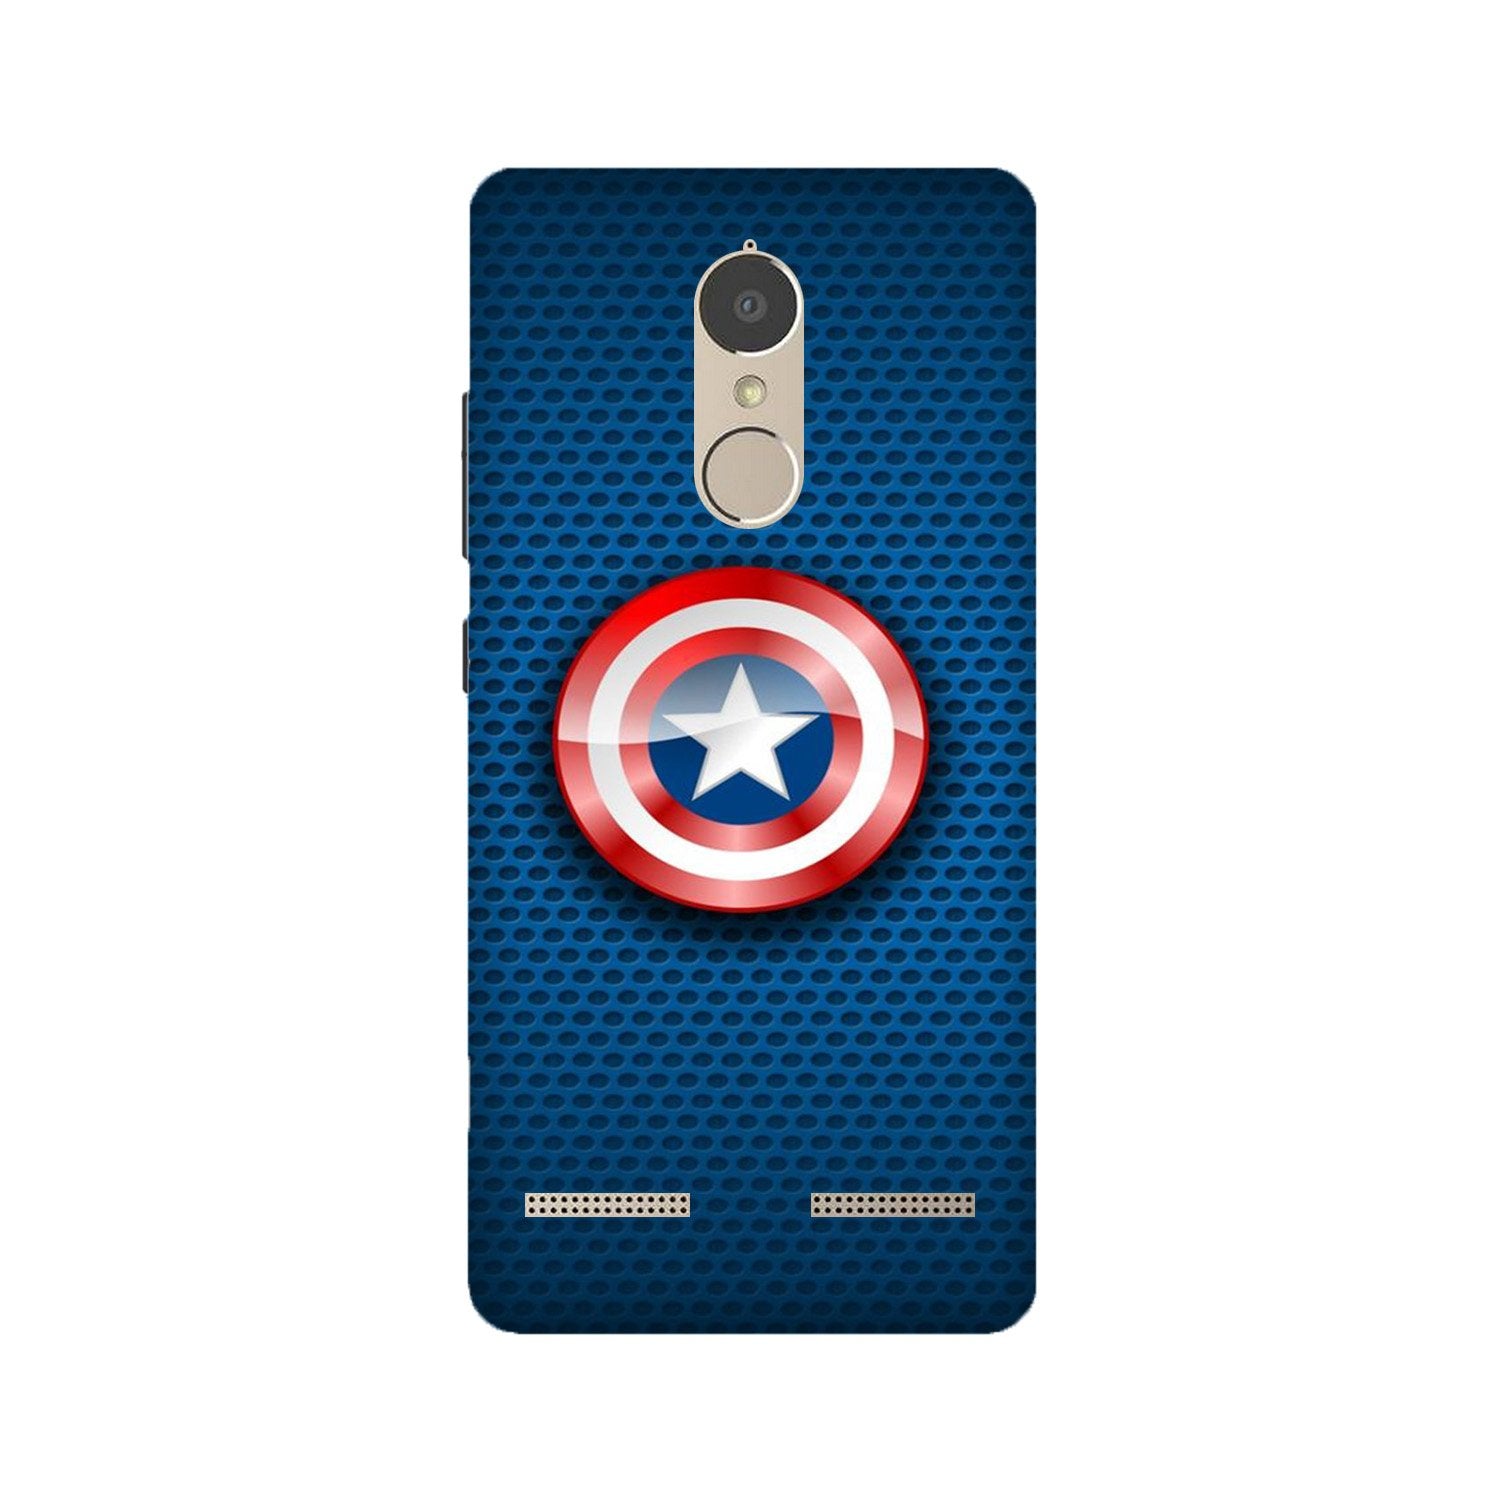 Captain America Shield Case for Lenovo K6 / K6 Power (Design No. 253)